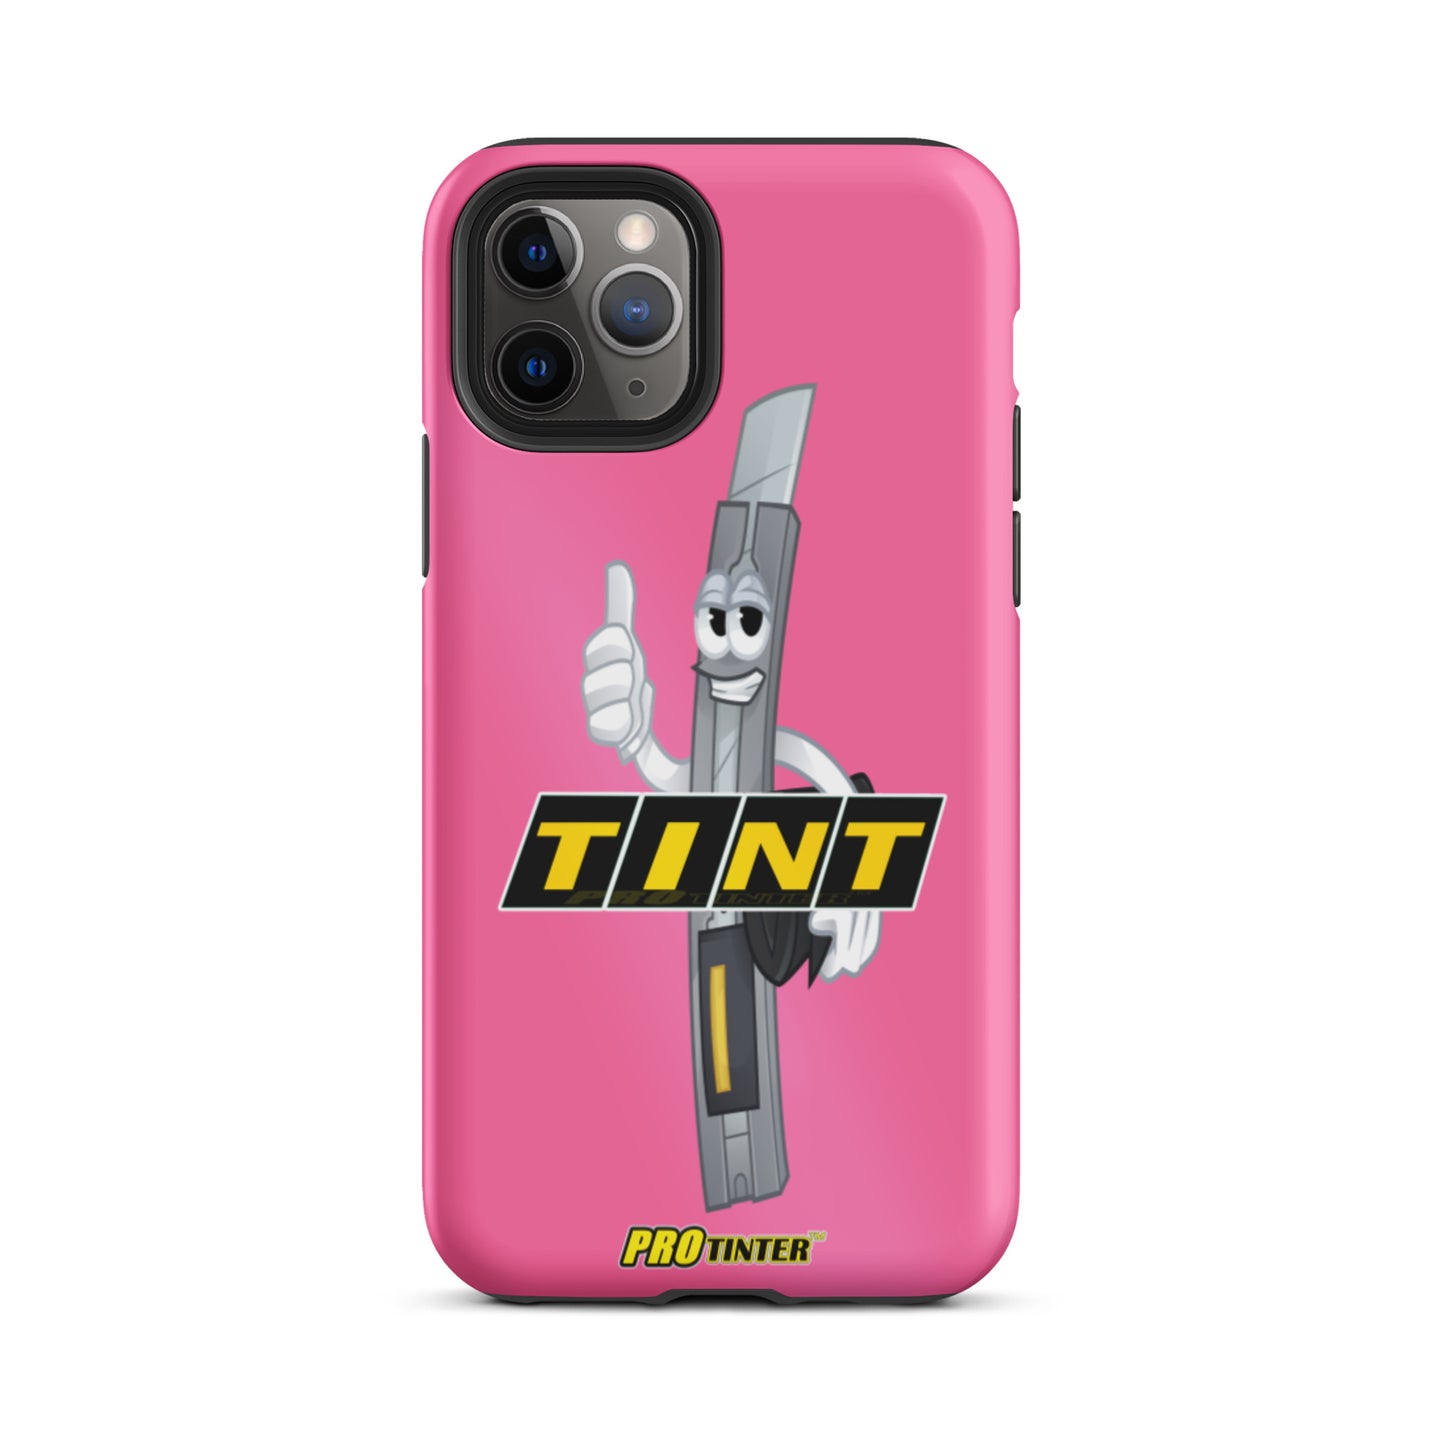 Pink TINT by PRO Tinter Tough iPhone case